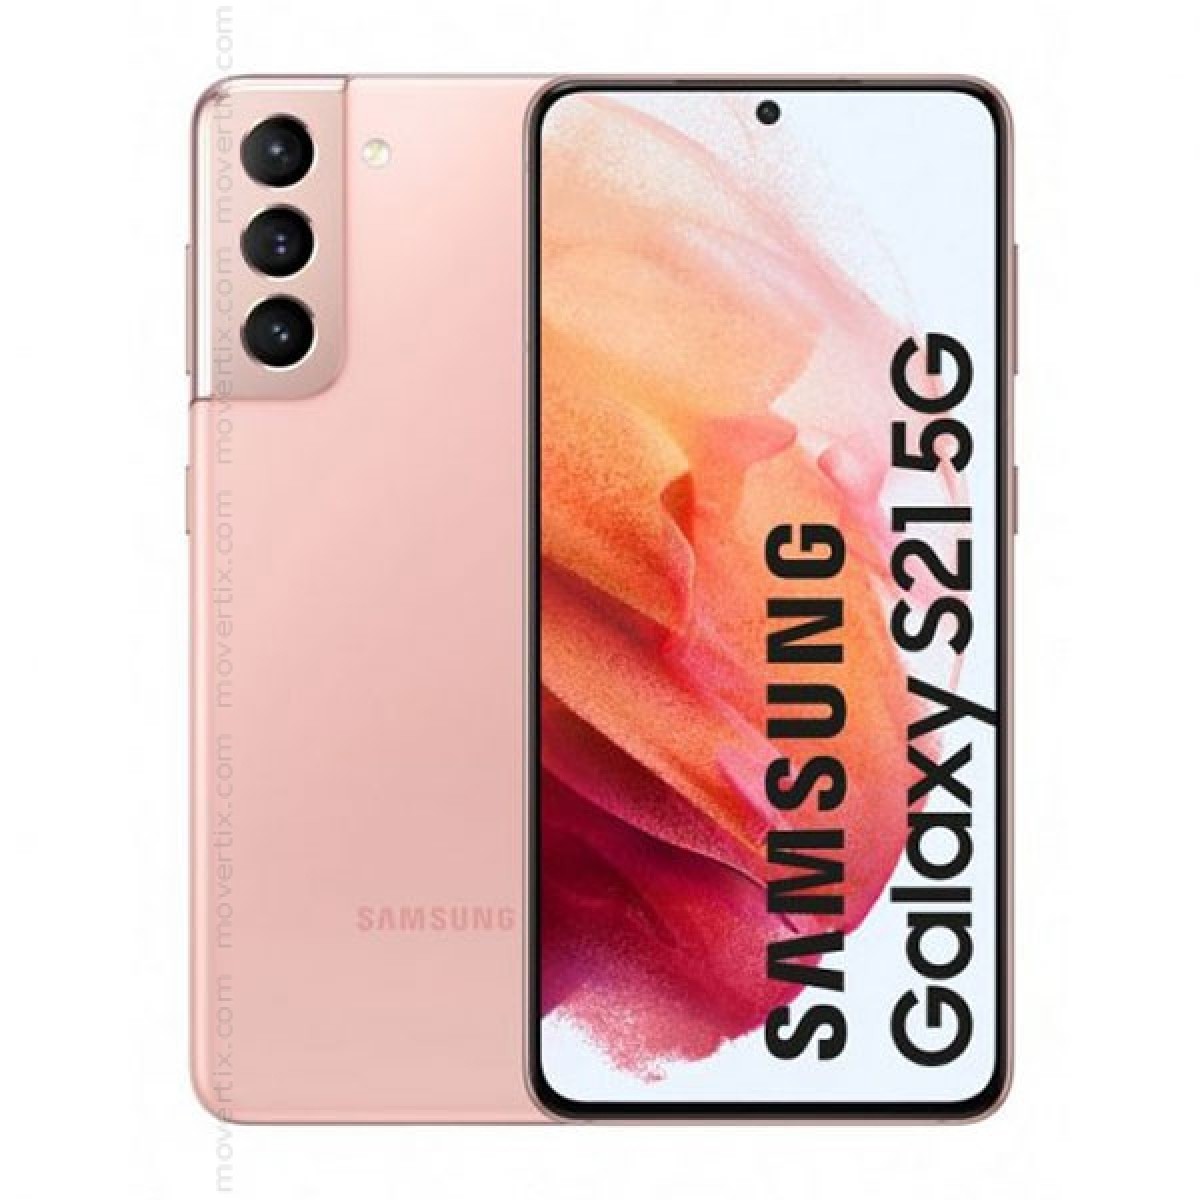 Samsung Galaxy S21 5g Phantom Pink 128gb And 8gb Ram Sm G991b Movertix Mobile Phones Shop